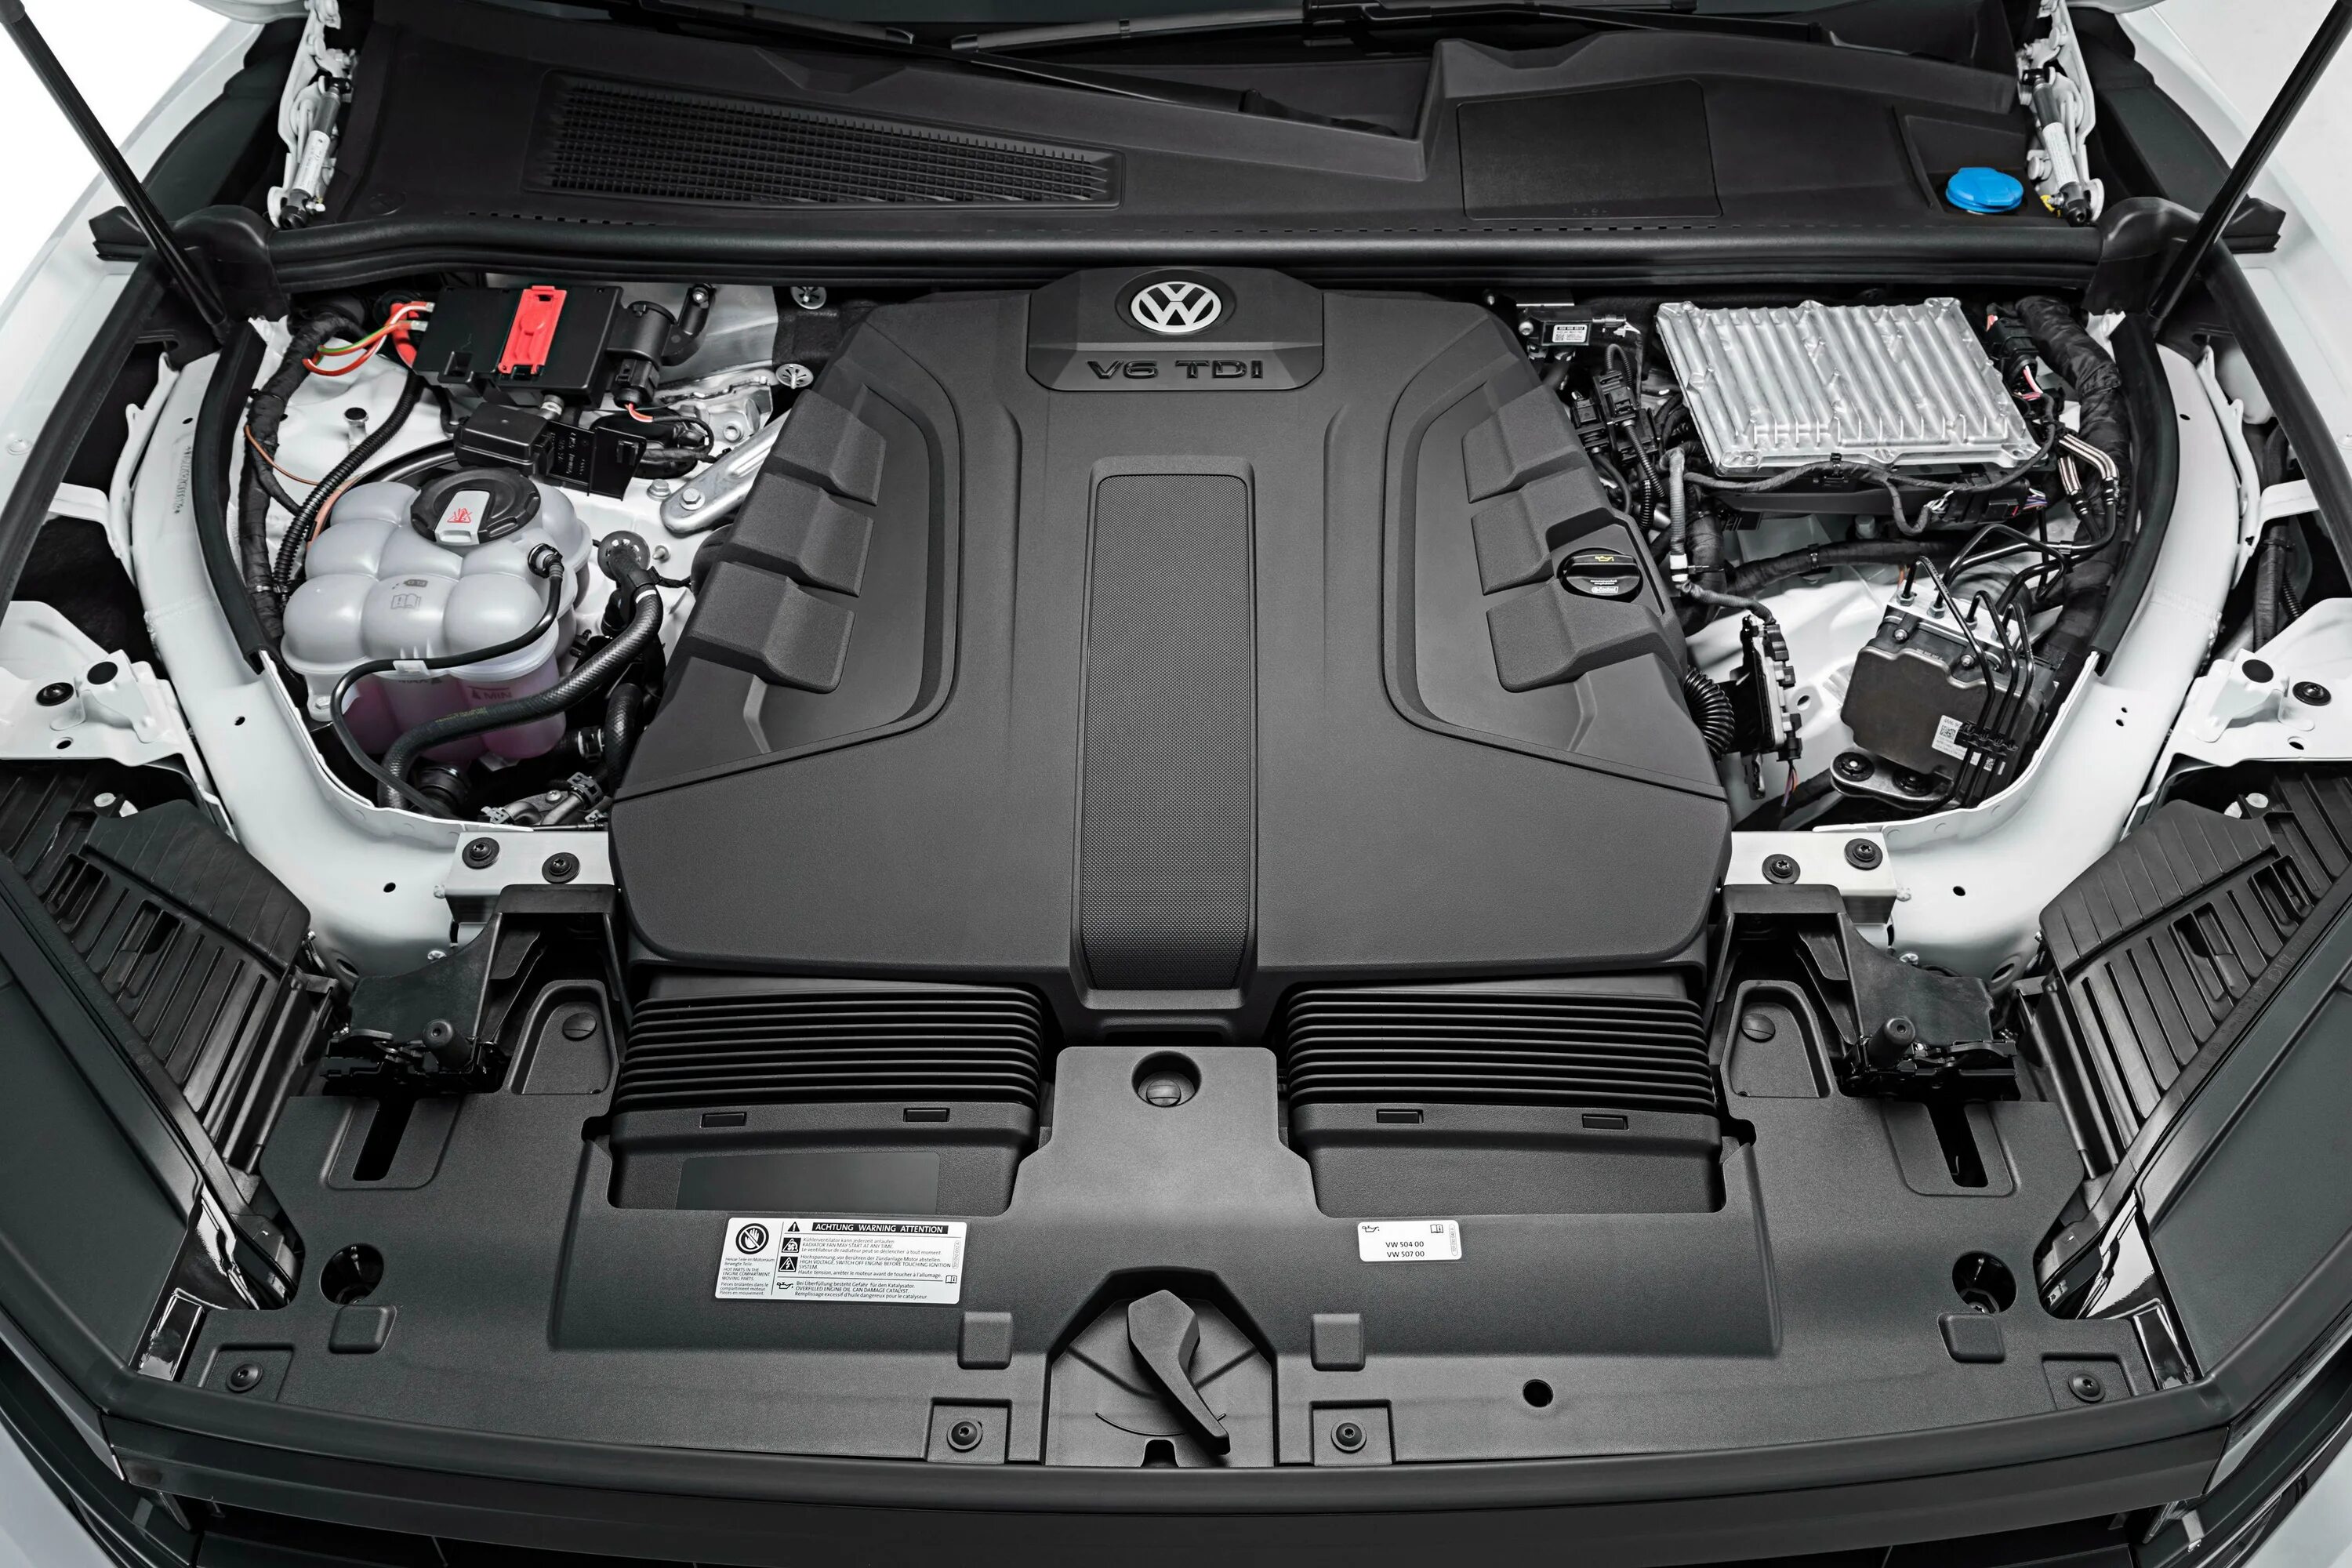 Volkswagen Touareg v8 TDI двигатель. Туарег v8 дизель. Фольксваген Туарег v6. Туарег 2019 под капотом. Фольксваген 3 литра дизель